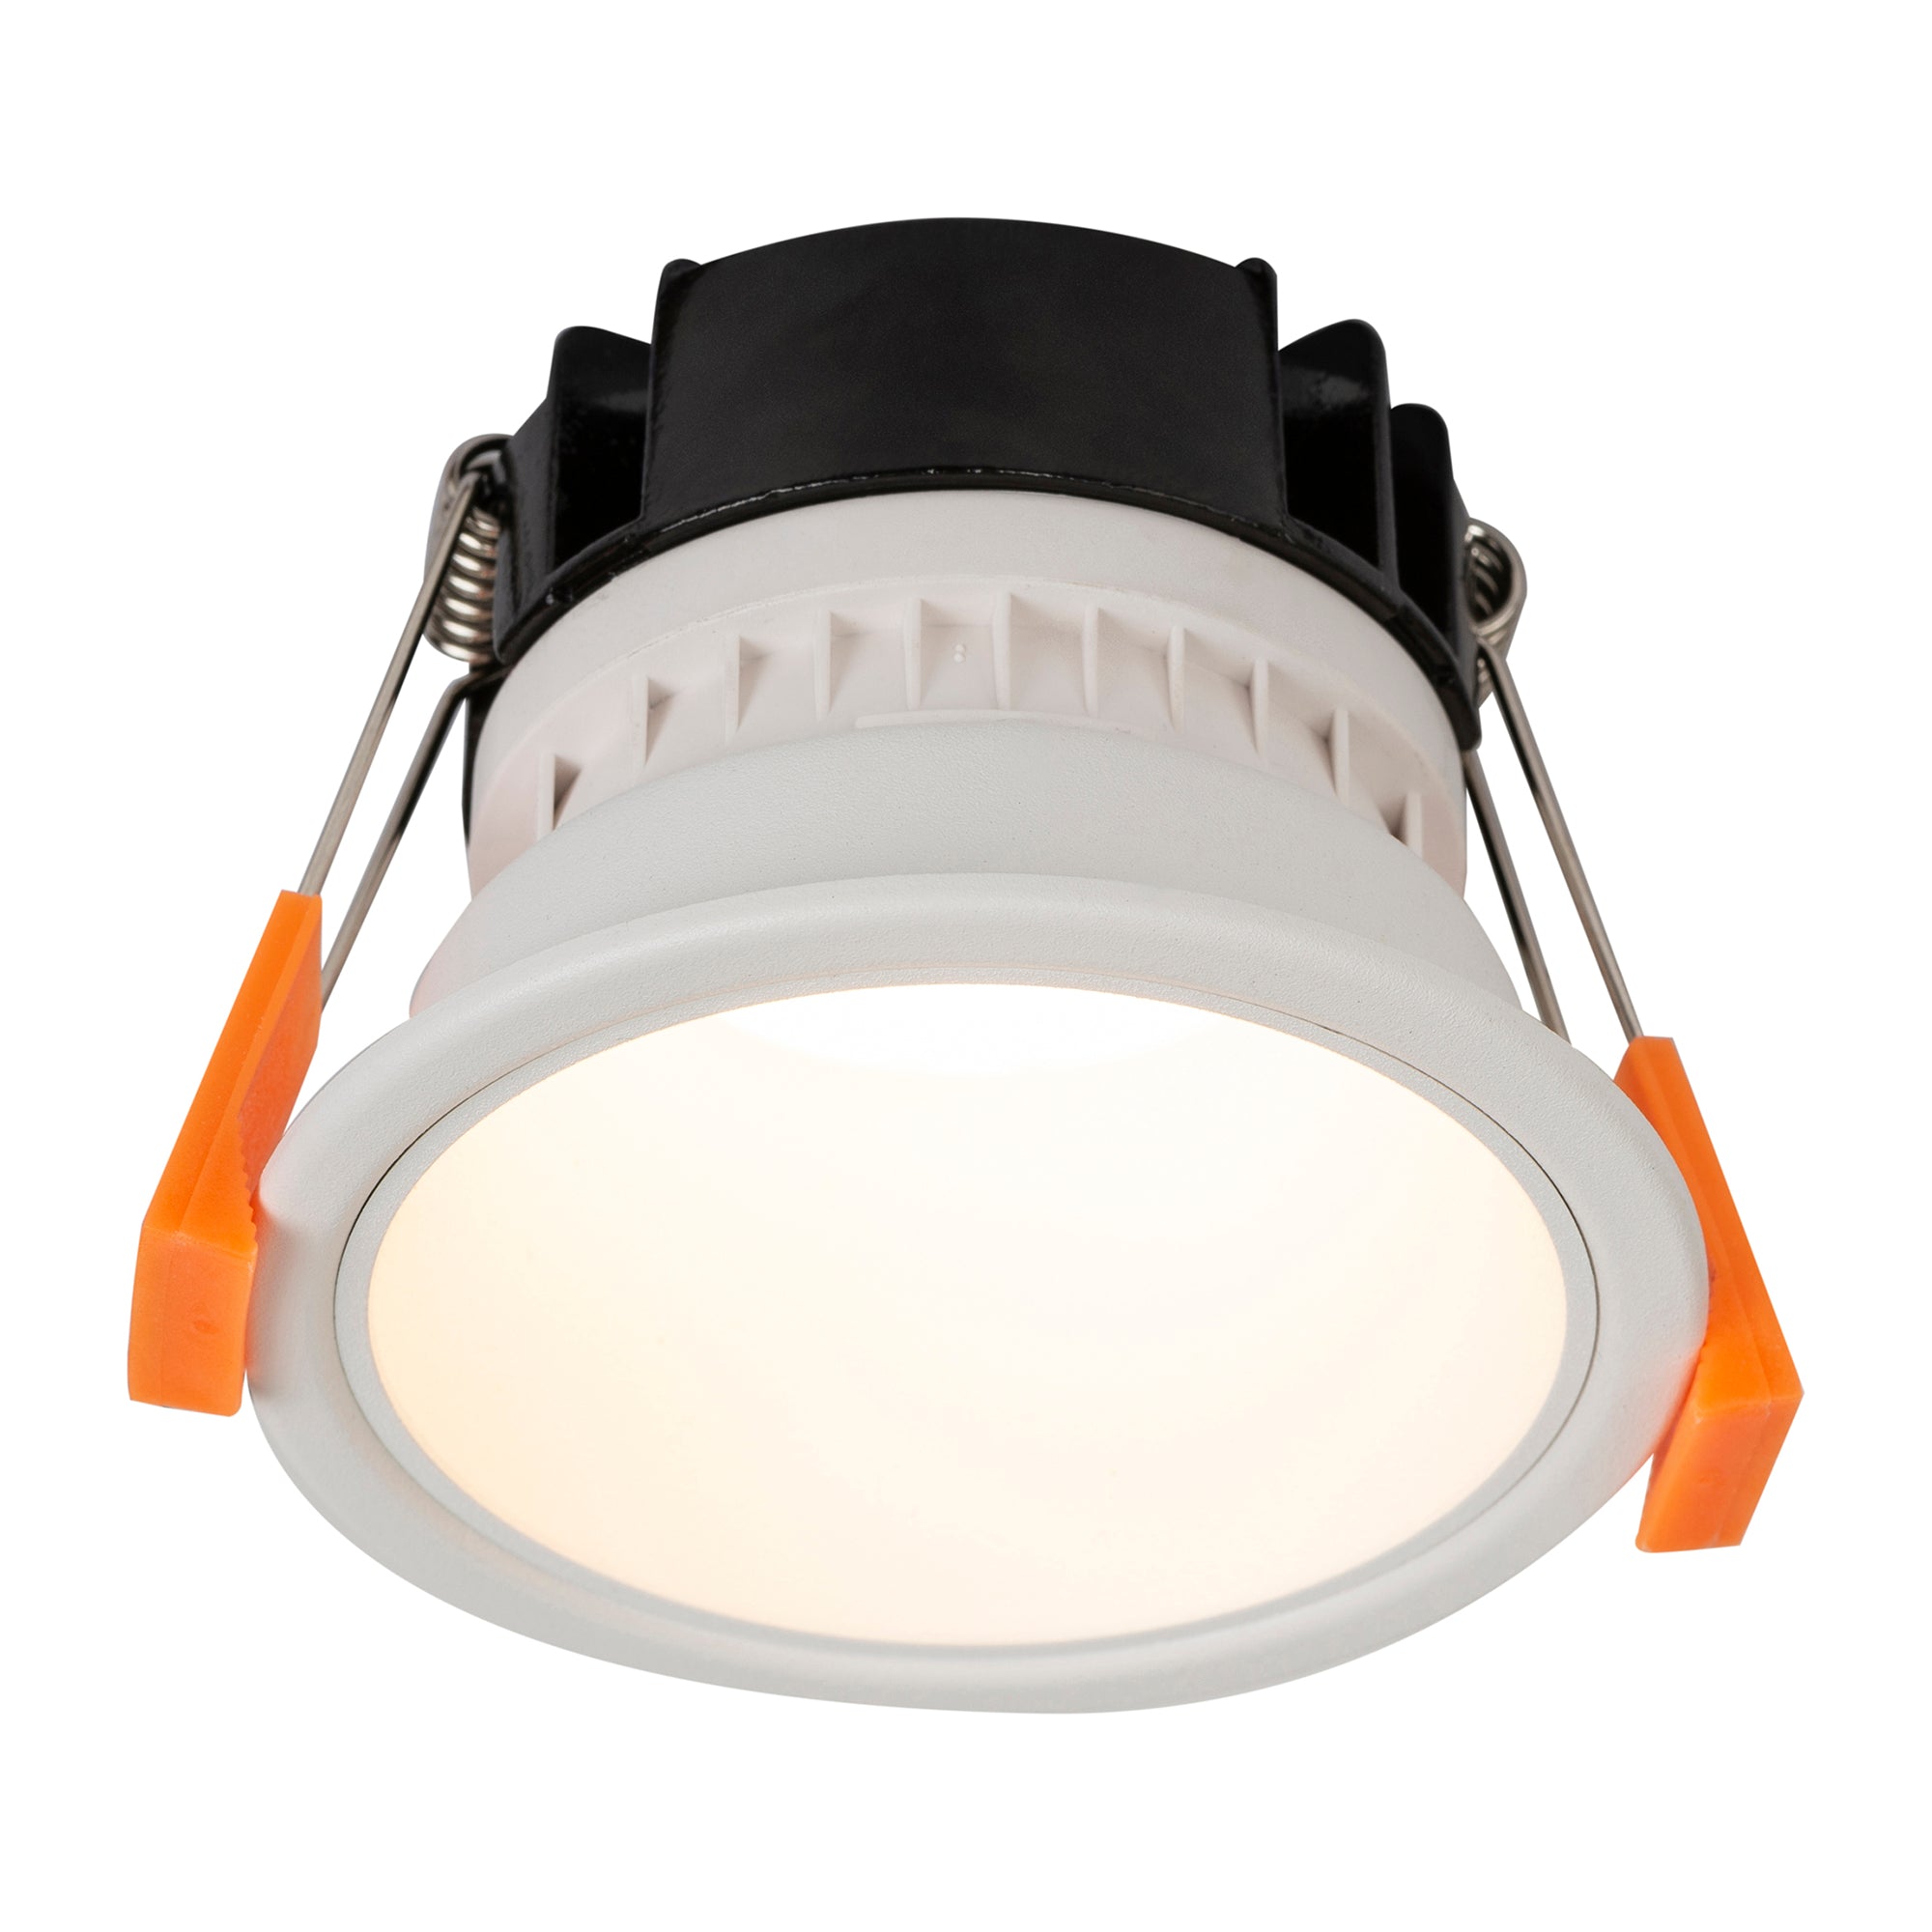 HV5529D2W-WW - Gleam White with White Insert Fixed Dim to Warm LED Downlight